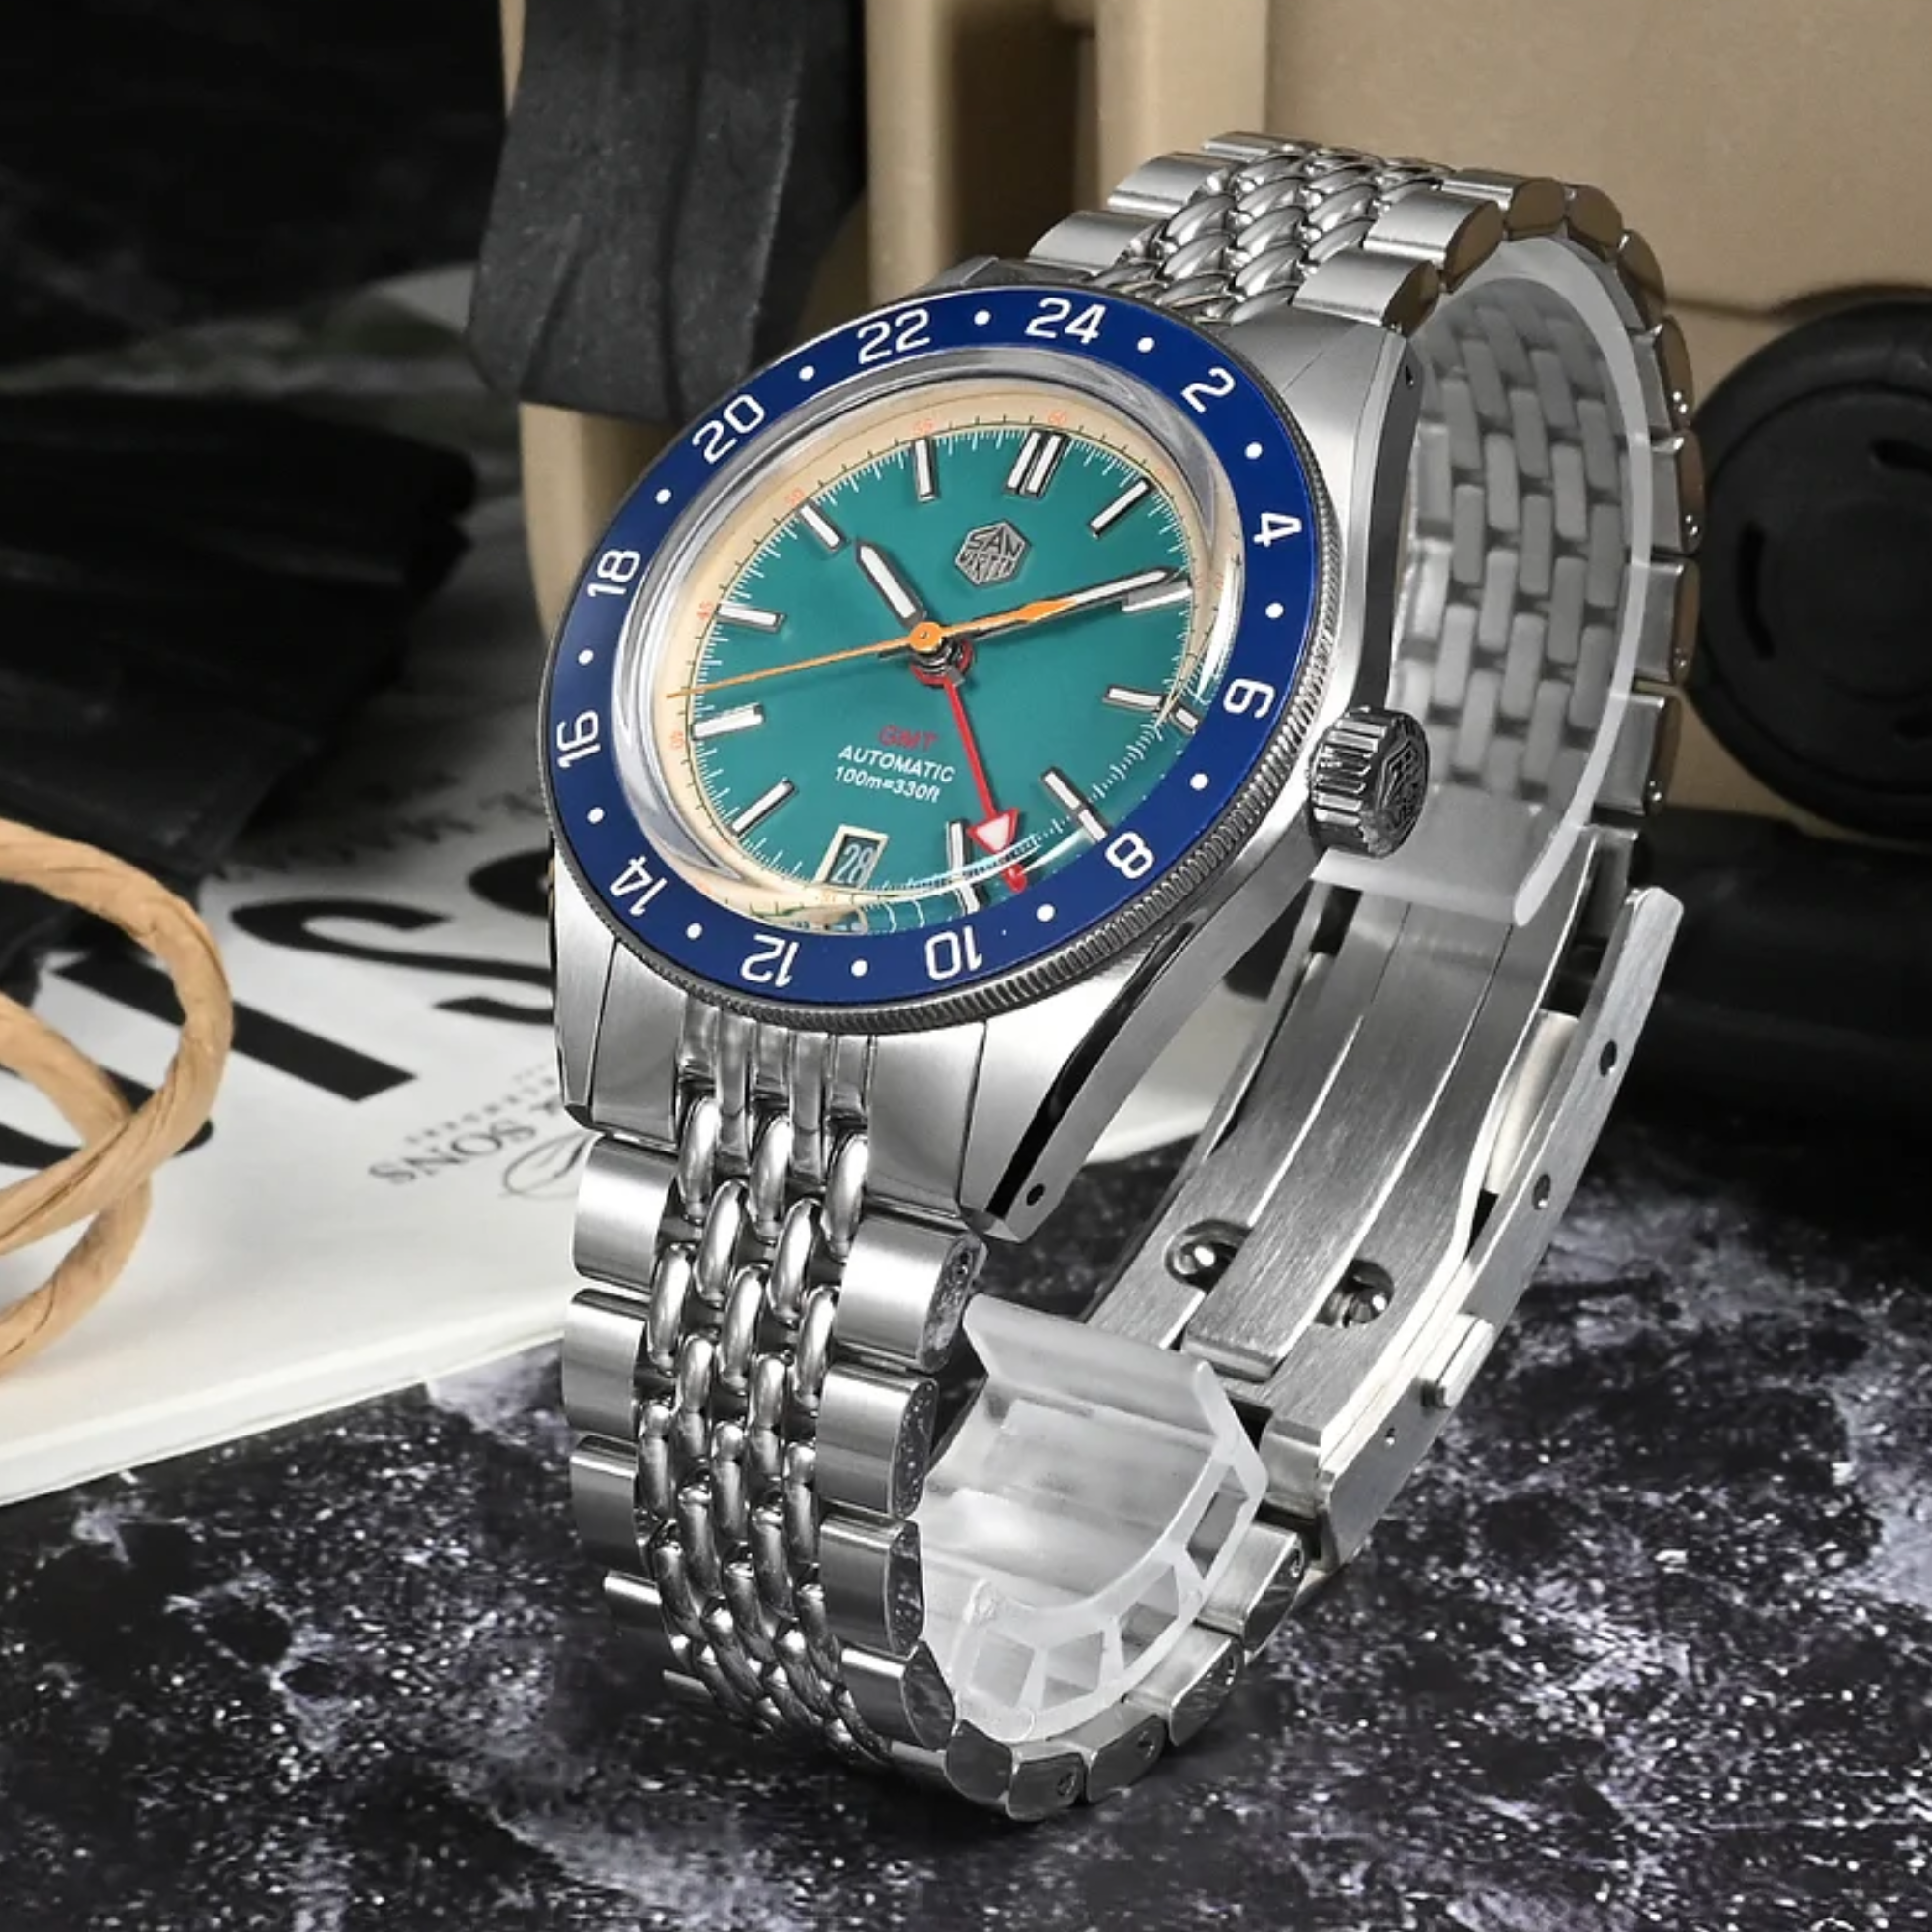 San Martin New Original Design Men Watch 39.5mm GMT SN0116 - Blue san martin watches india online